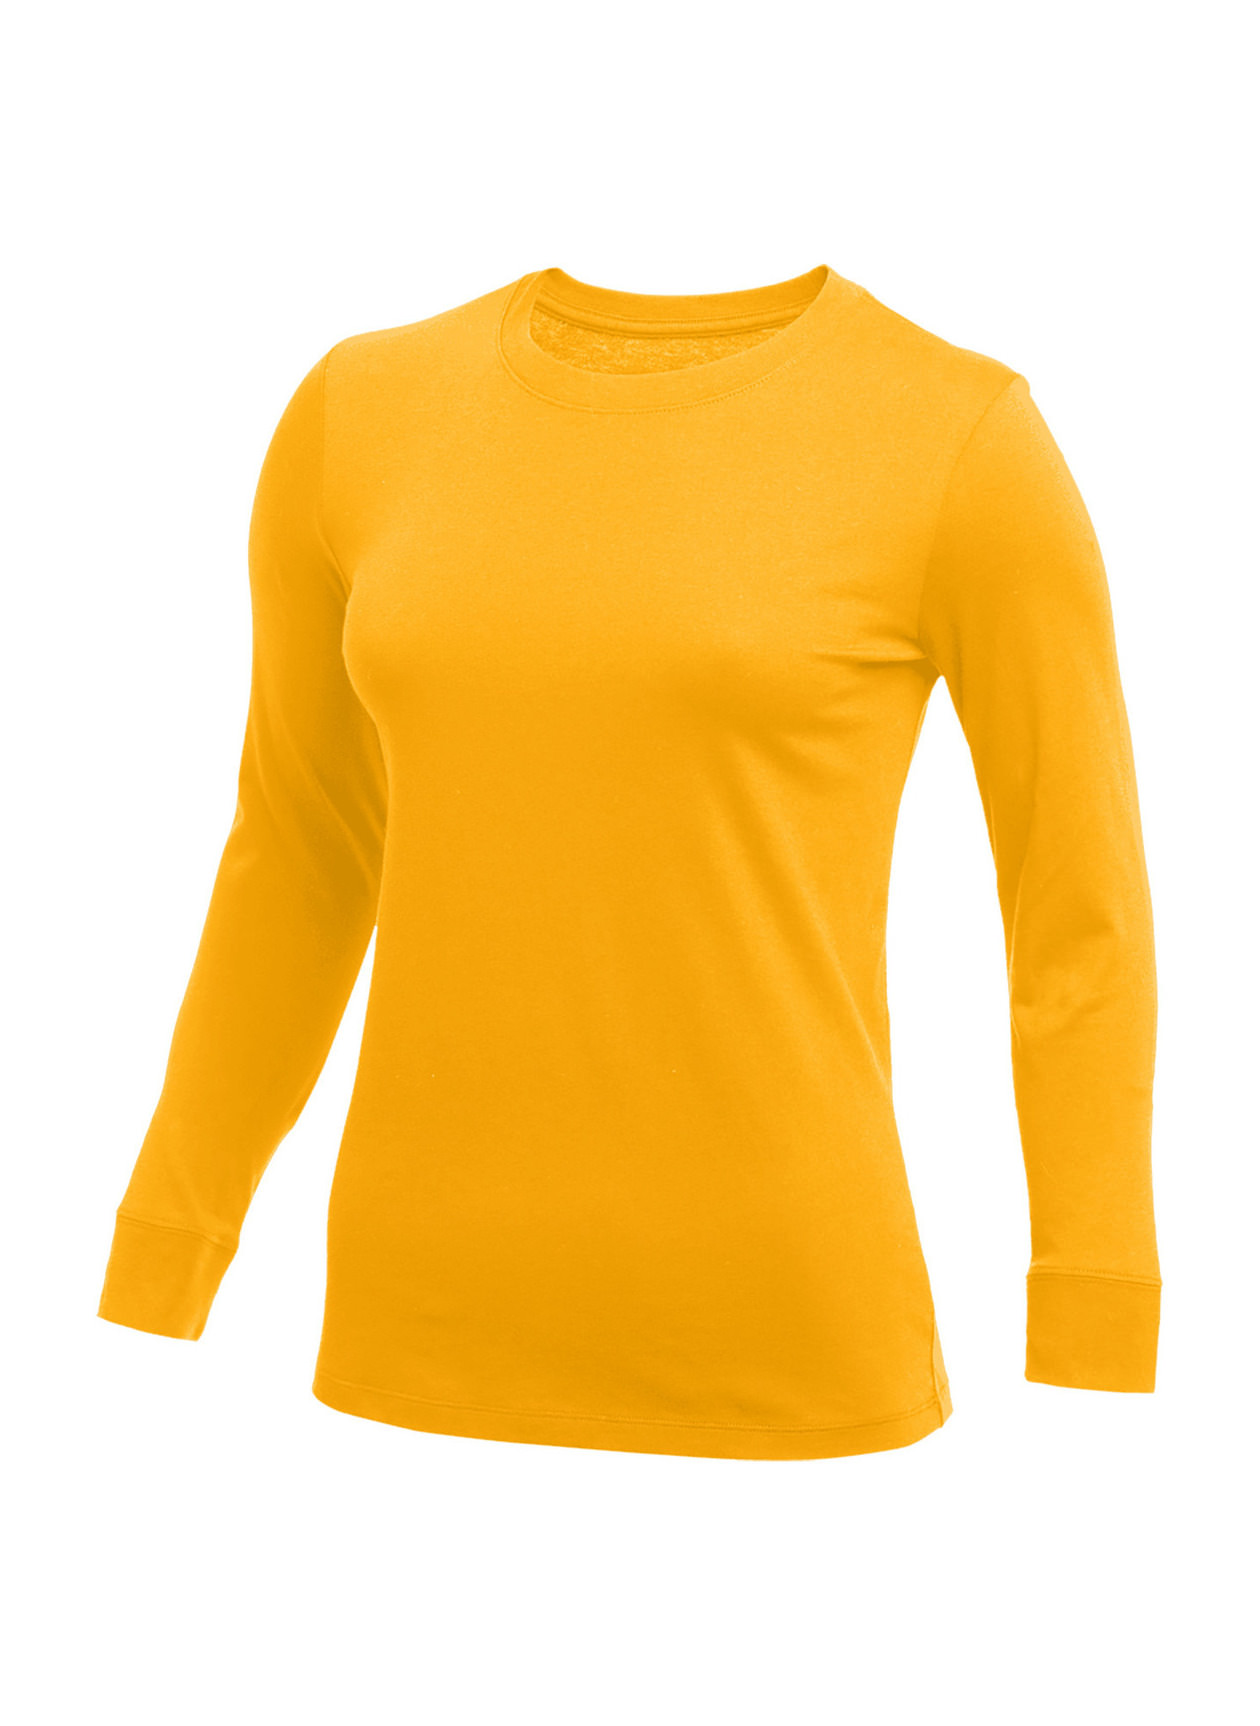 Nike Women's University Gold Long-Sleeve T-Shirt